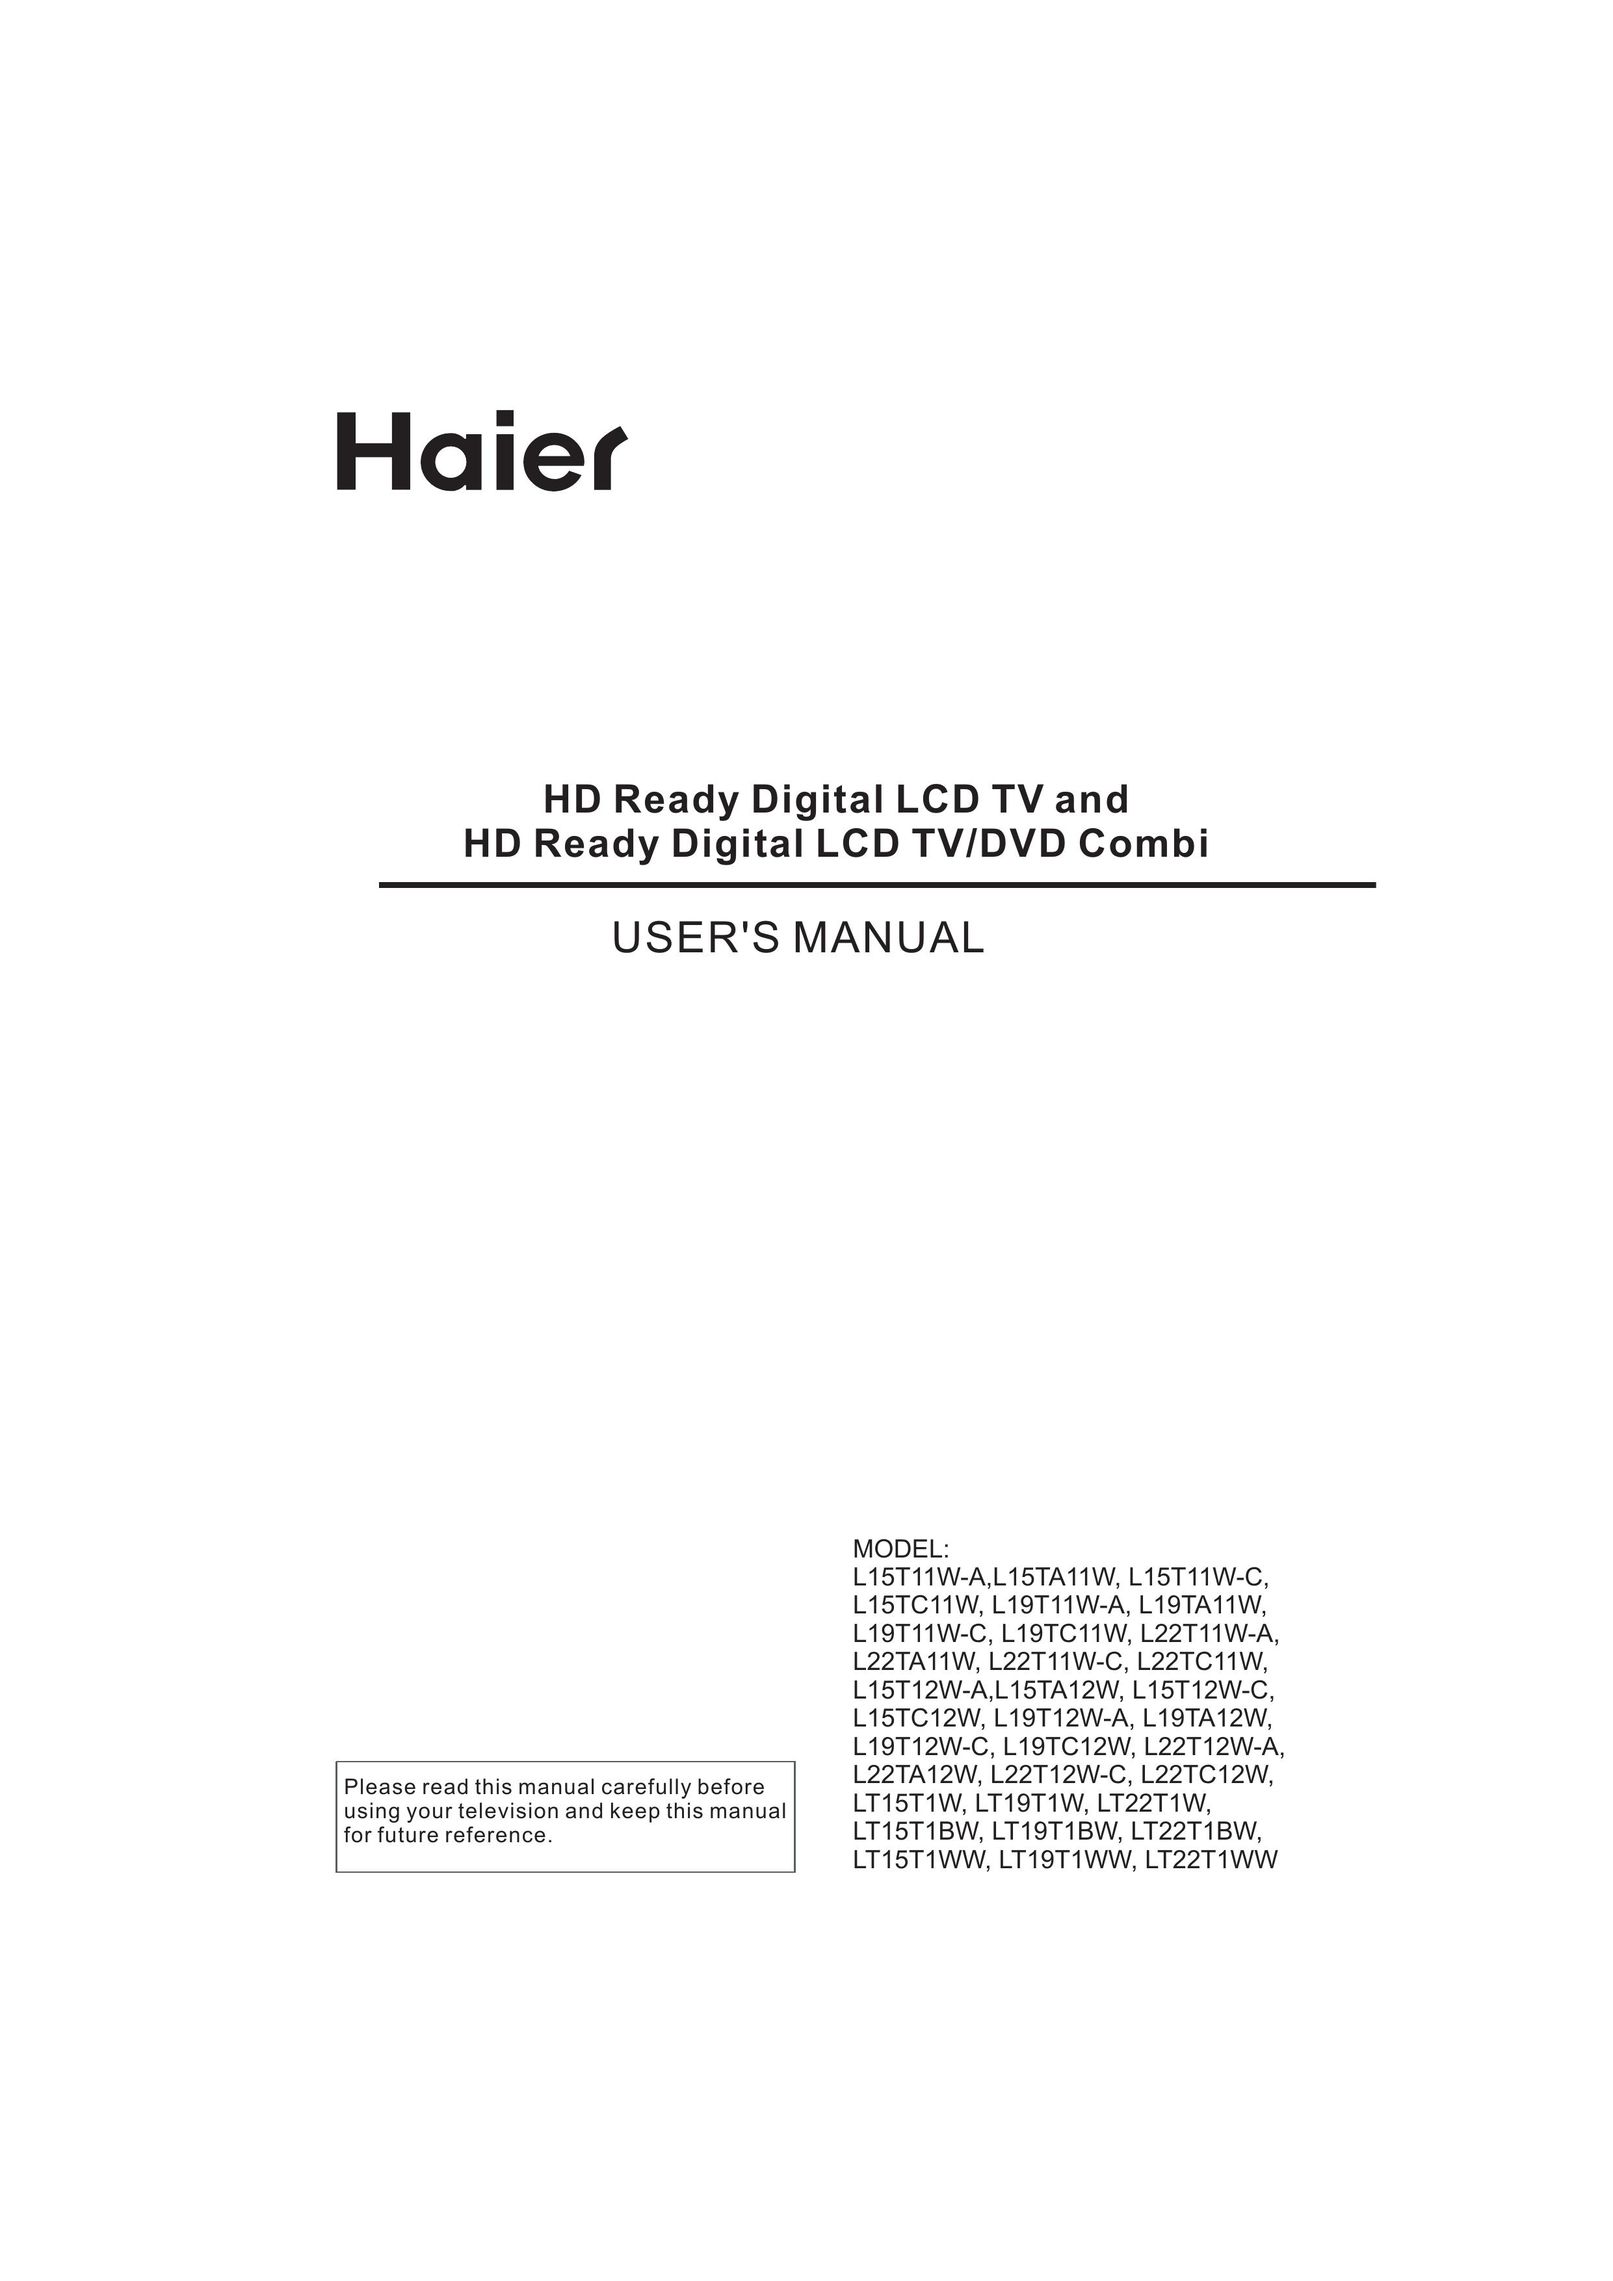 Haier L15TC12W TV DVD Combo User Manual